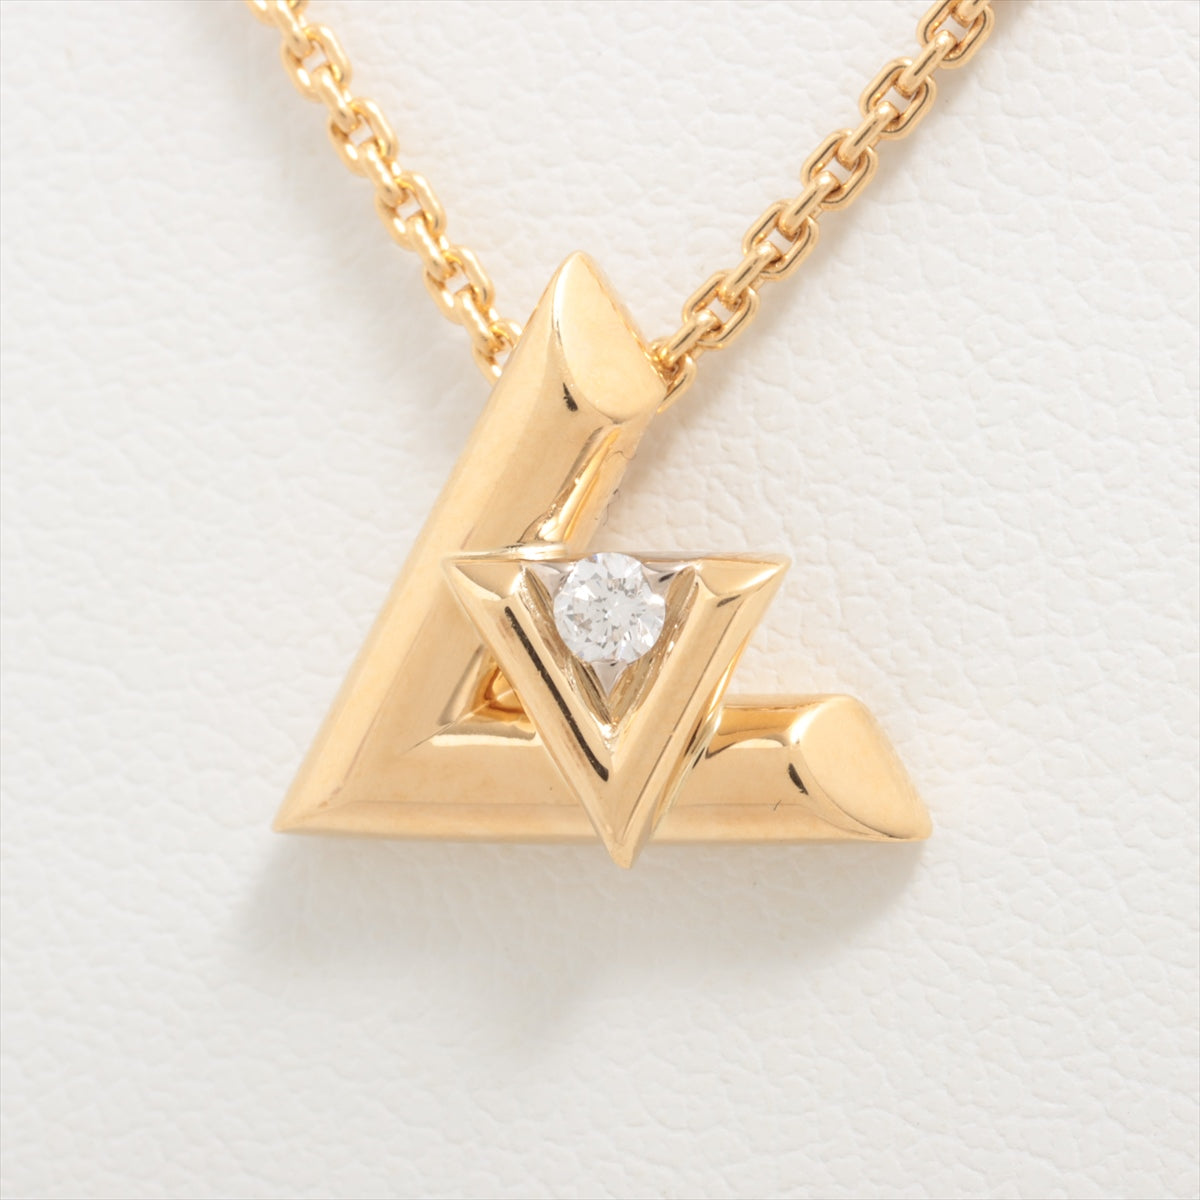 Louis Vuitton Pandantif LV Vault Wang PM diamond Necklace 750(YG) 6.0g